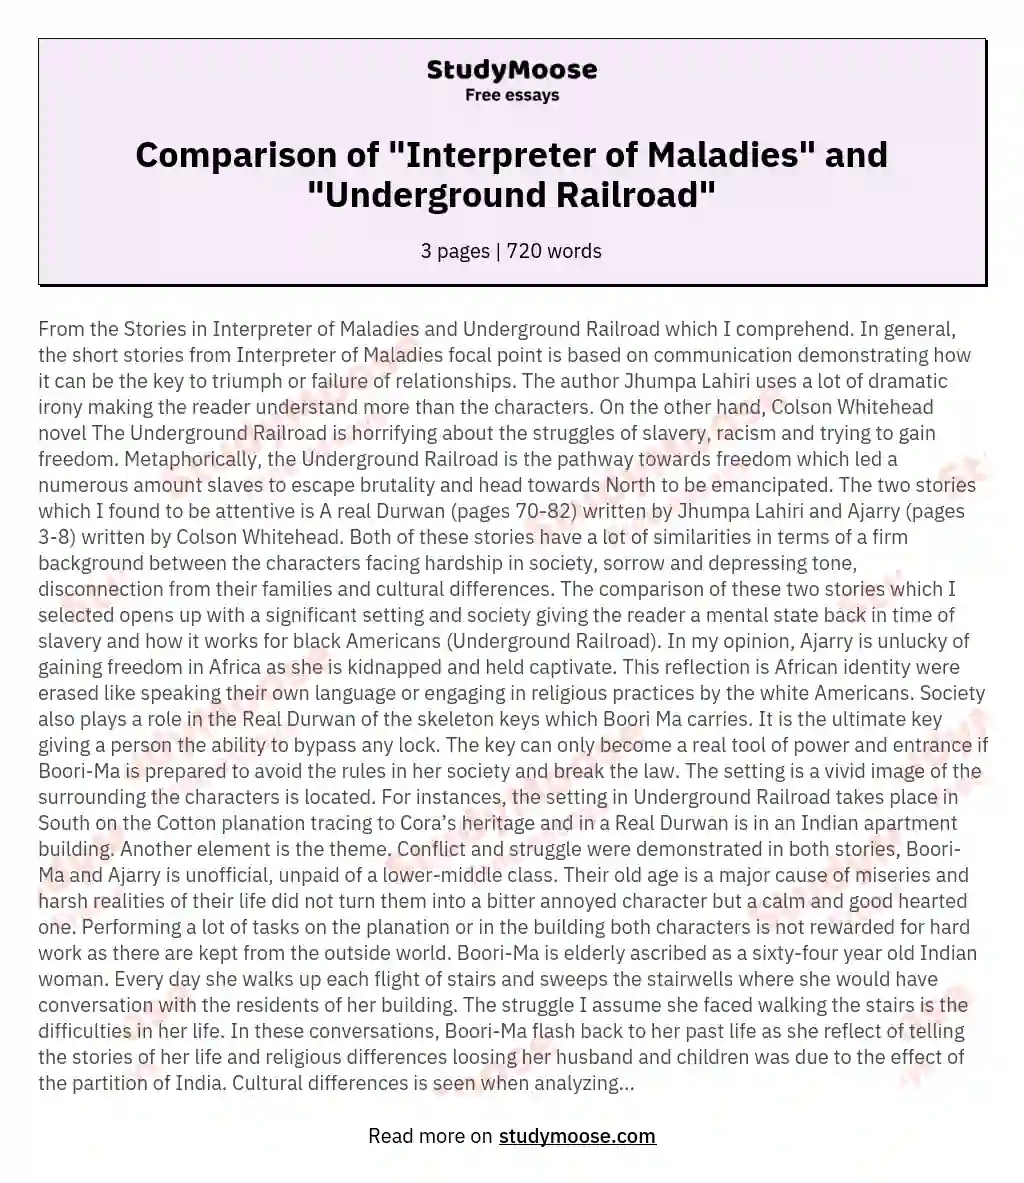 Comparison of "Interpreter of Maladies" and "Underground Railroad"